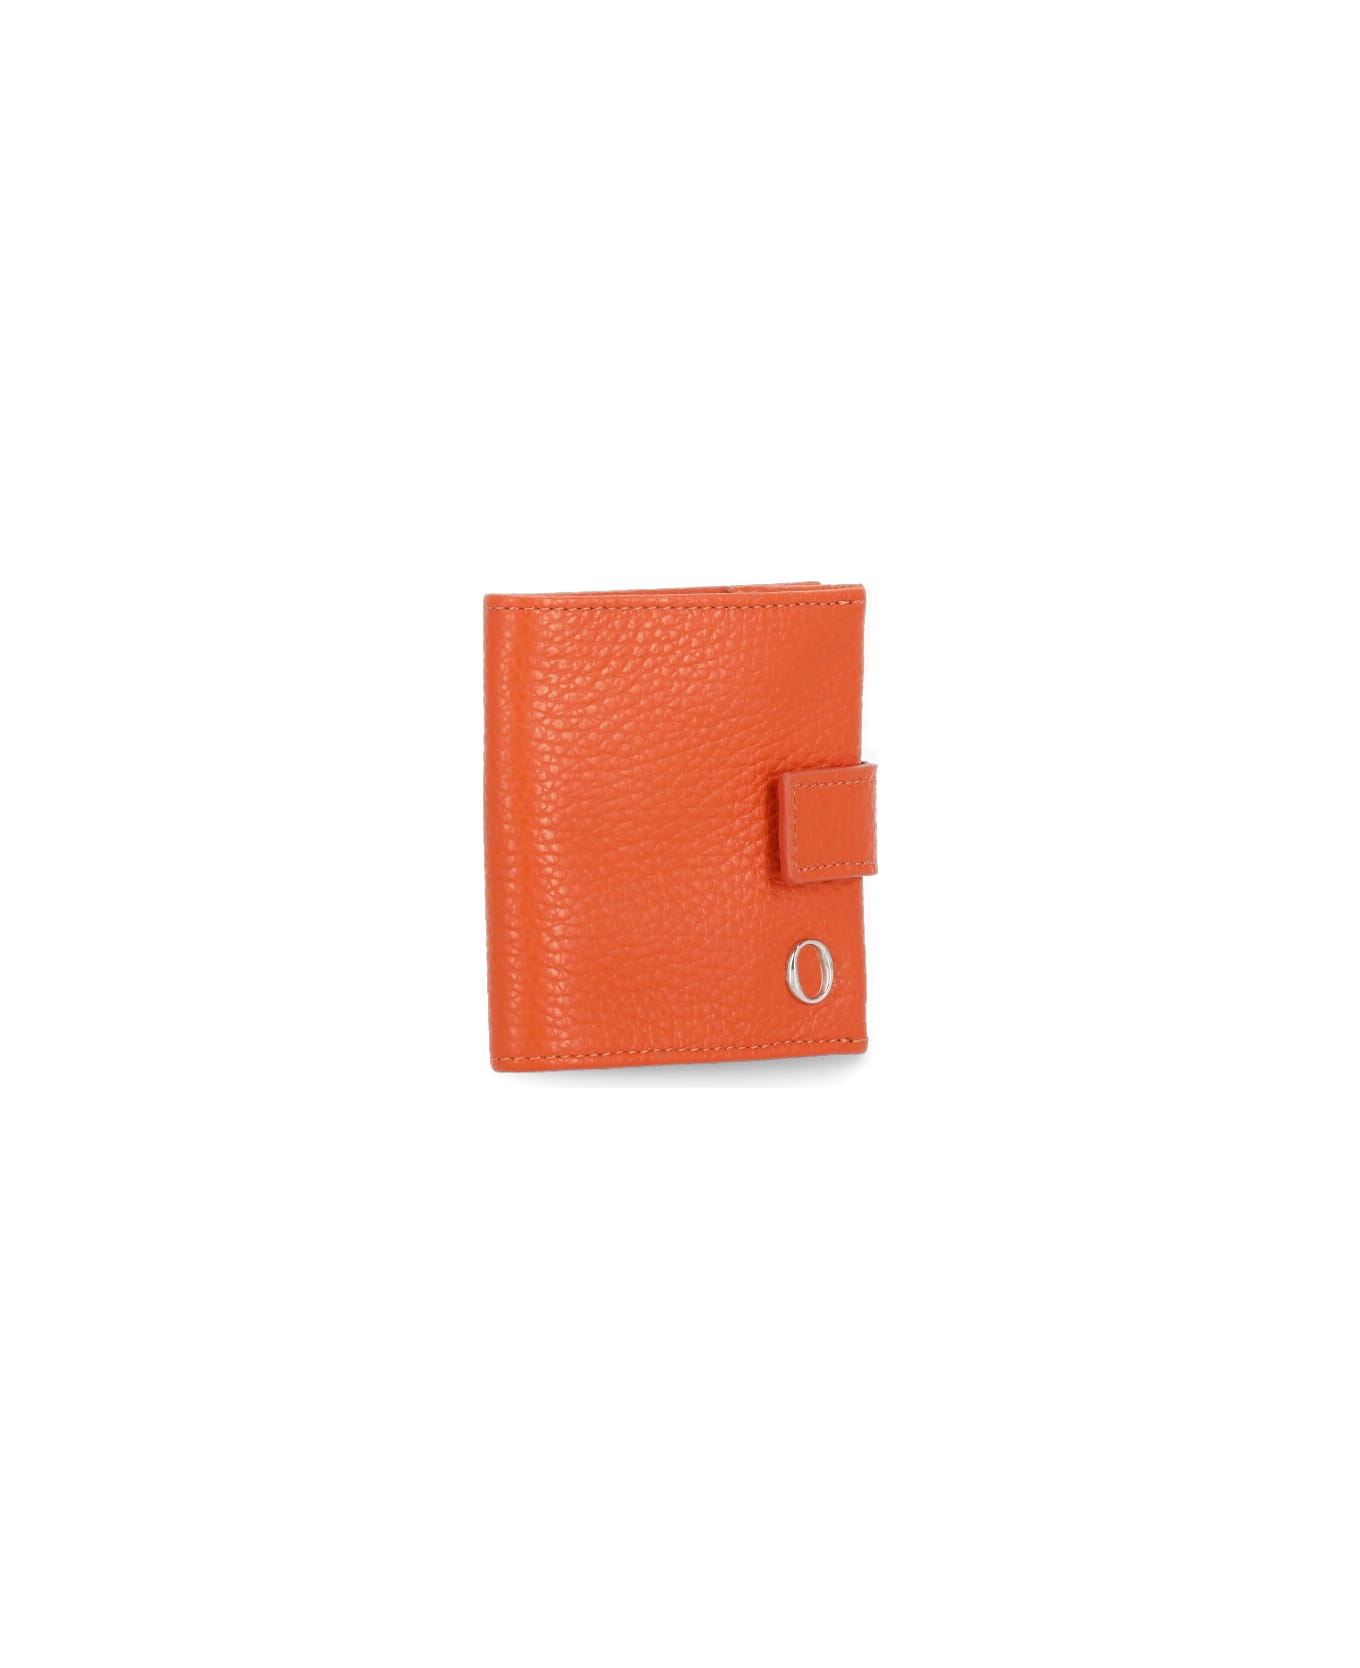 Orciani Micron Leather Purse - Orange